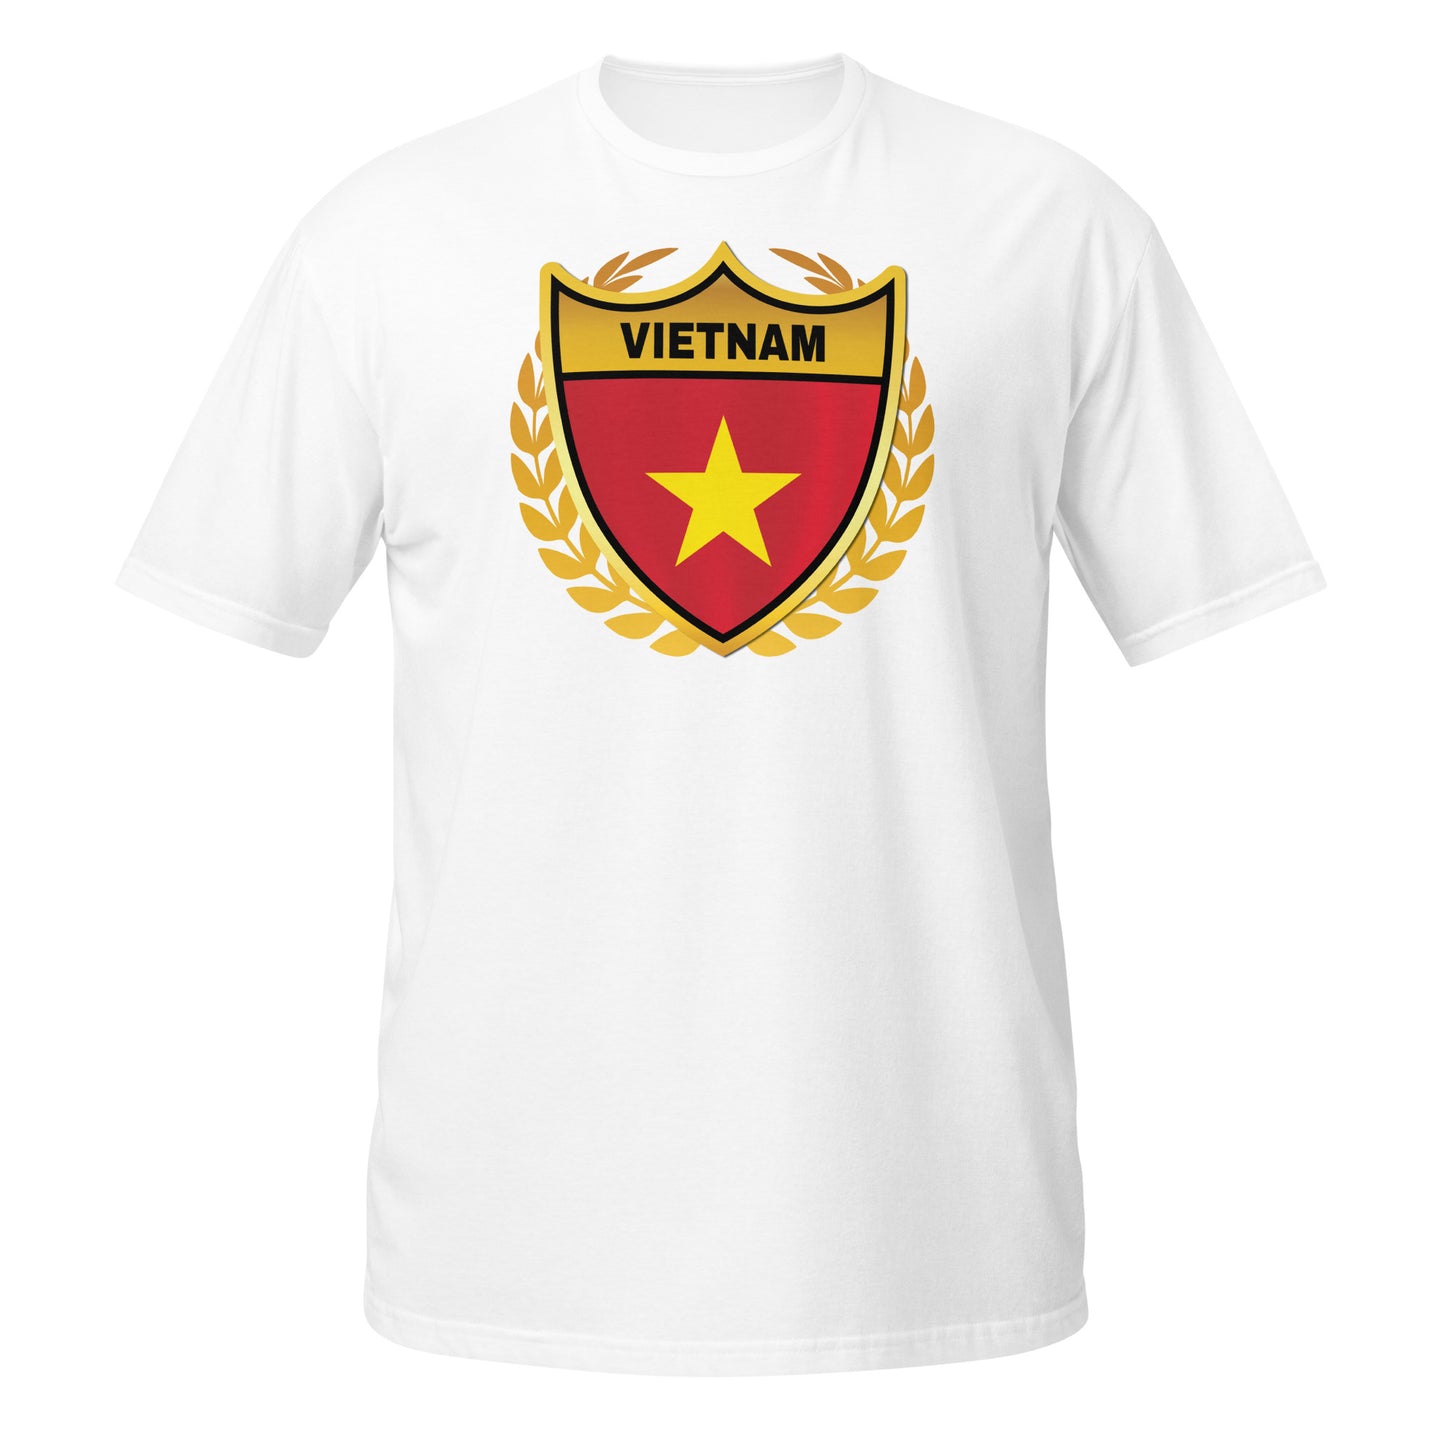 White Vietnam T-shirt